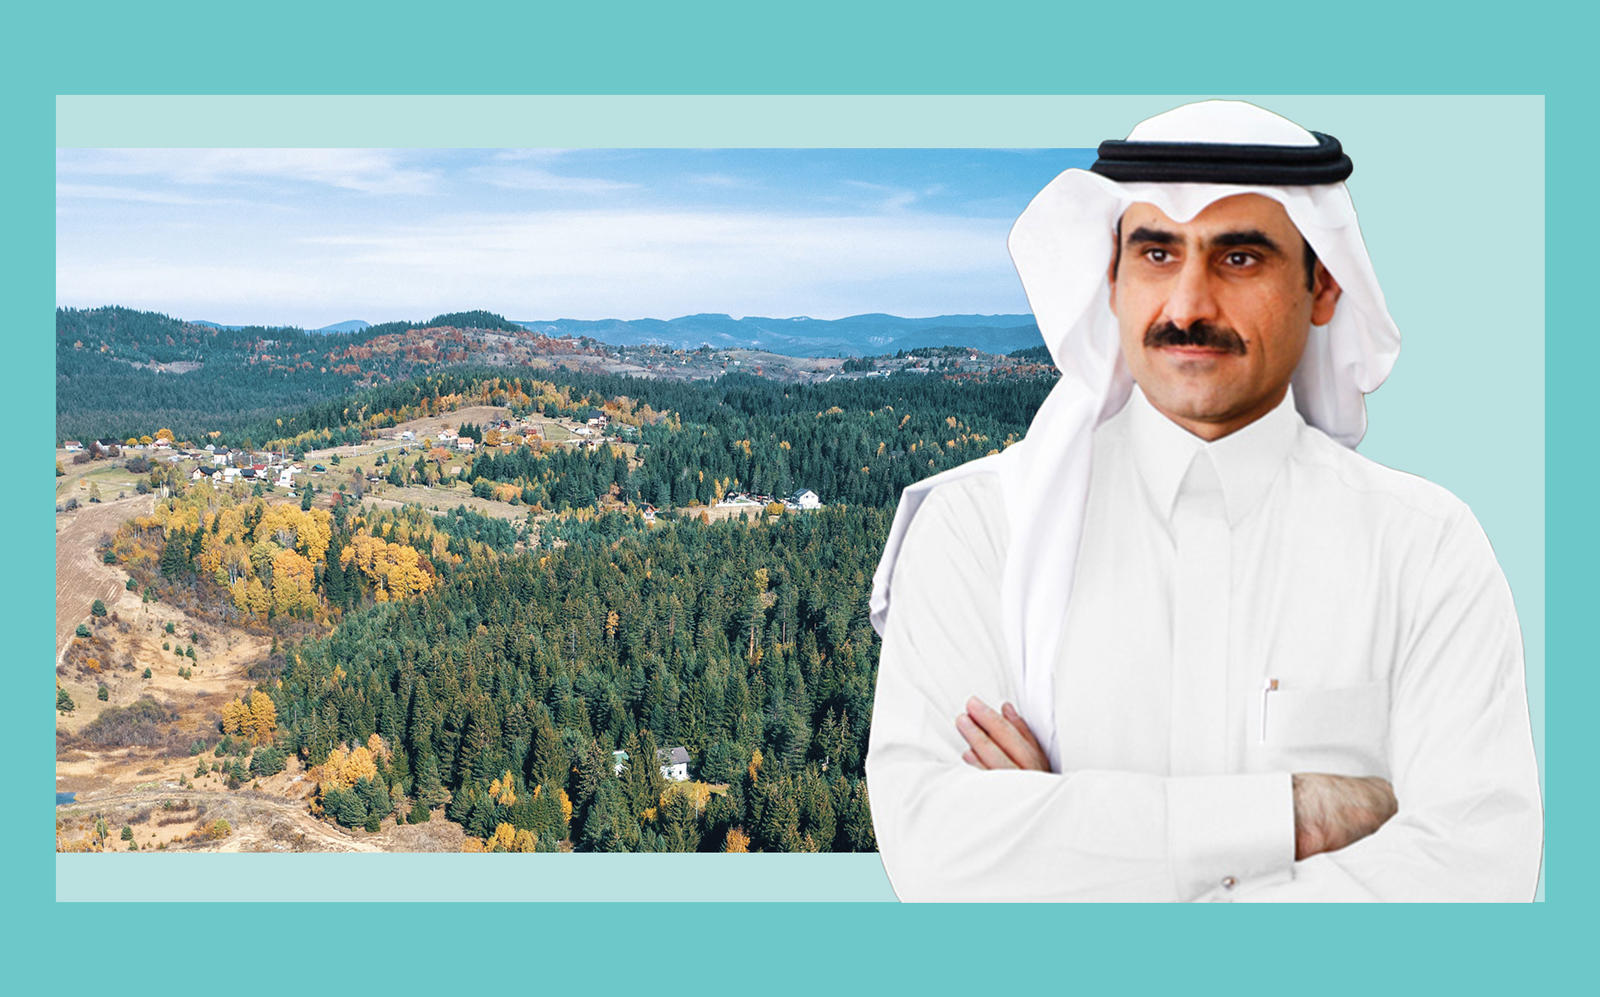 Dar Al Arkan chairman Yusuf bin Abdullah Al-Shalash and the development site (Dal Al Arkan)